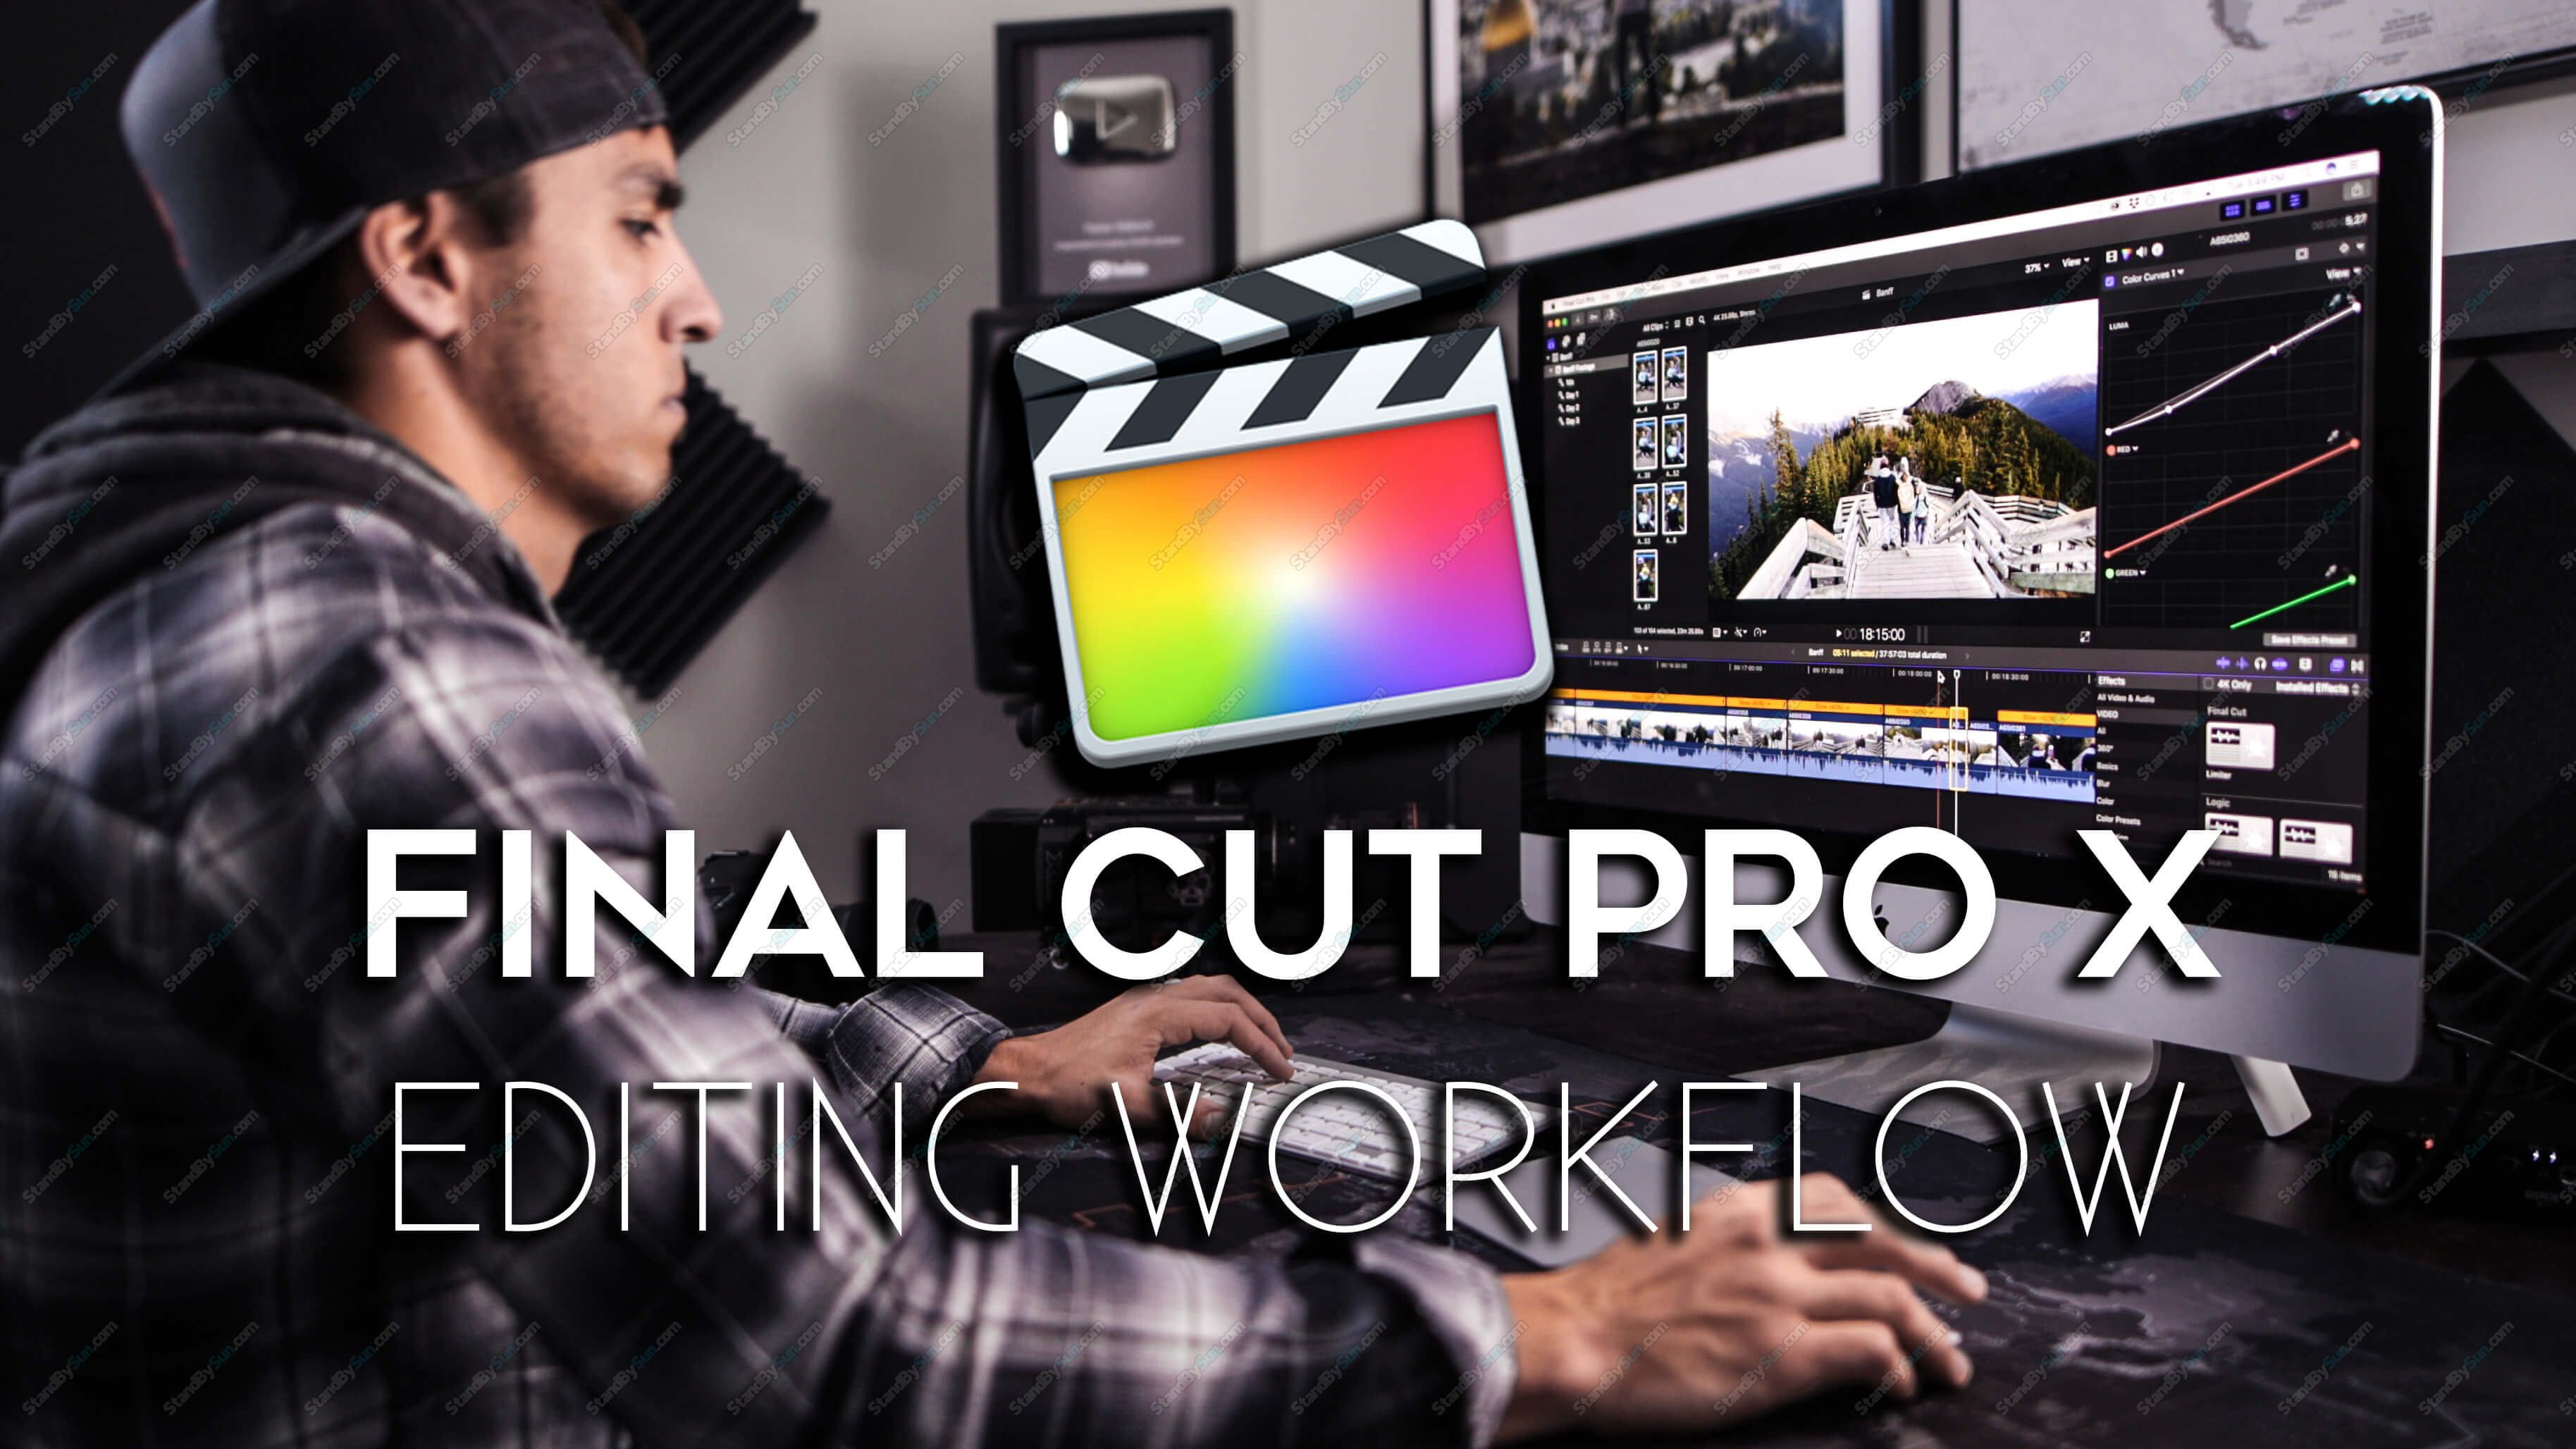 Parker Walbeck - Final Cut Pro X Editing Workflow 2020